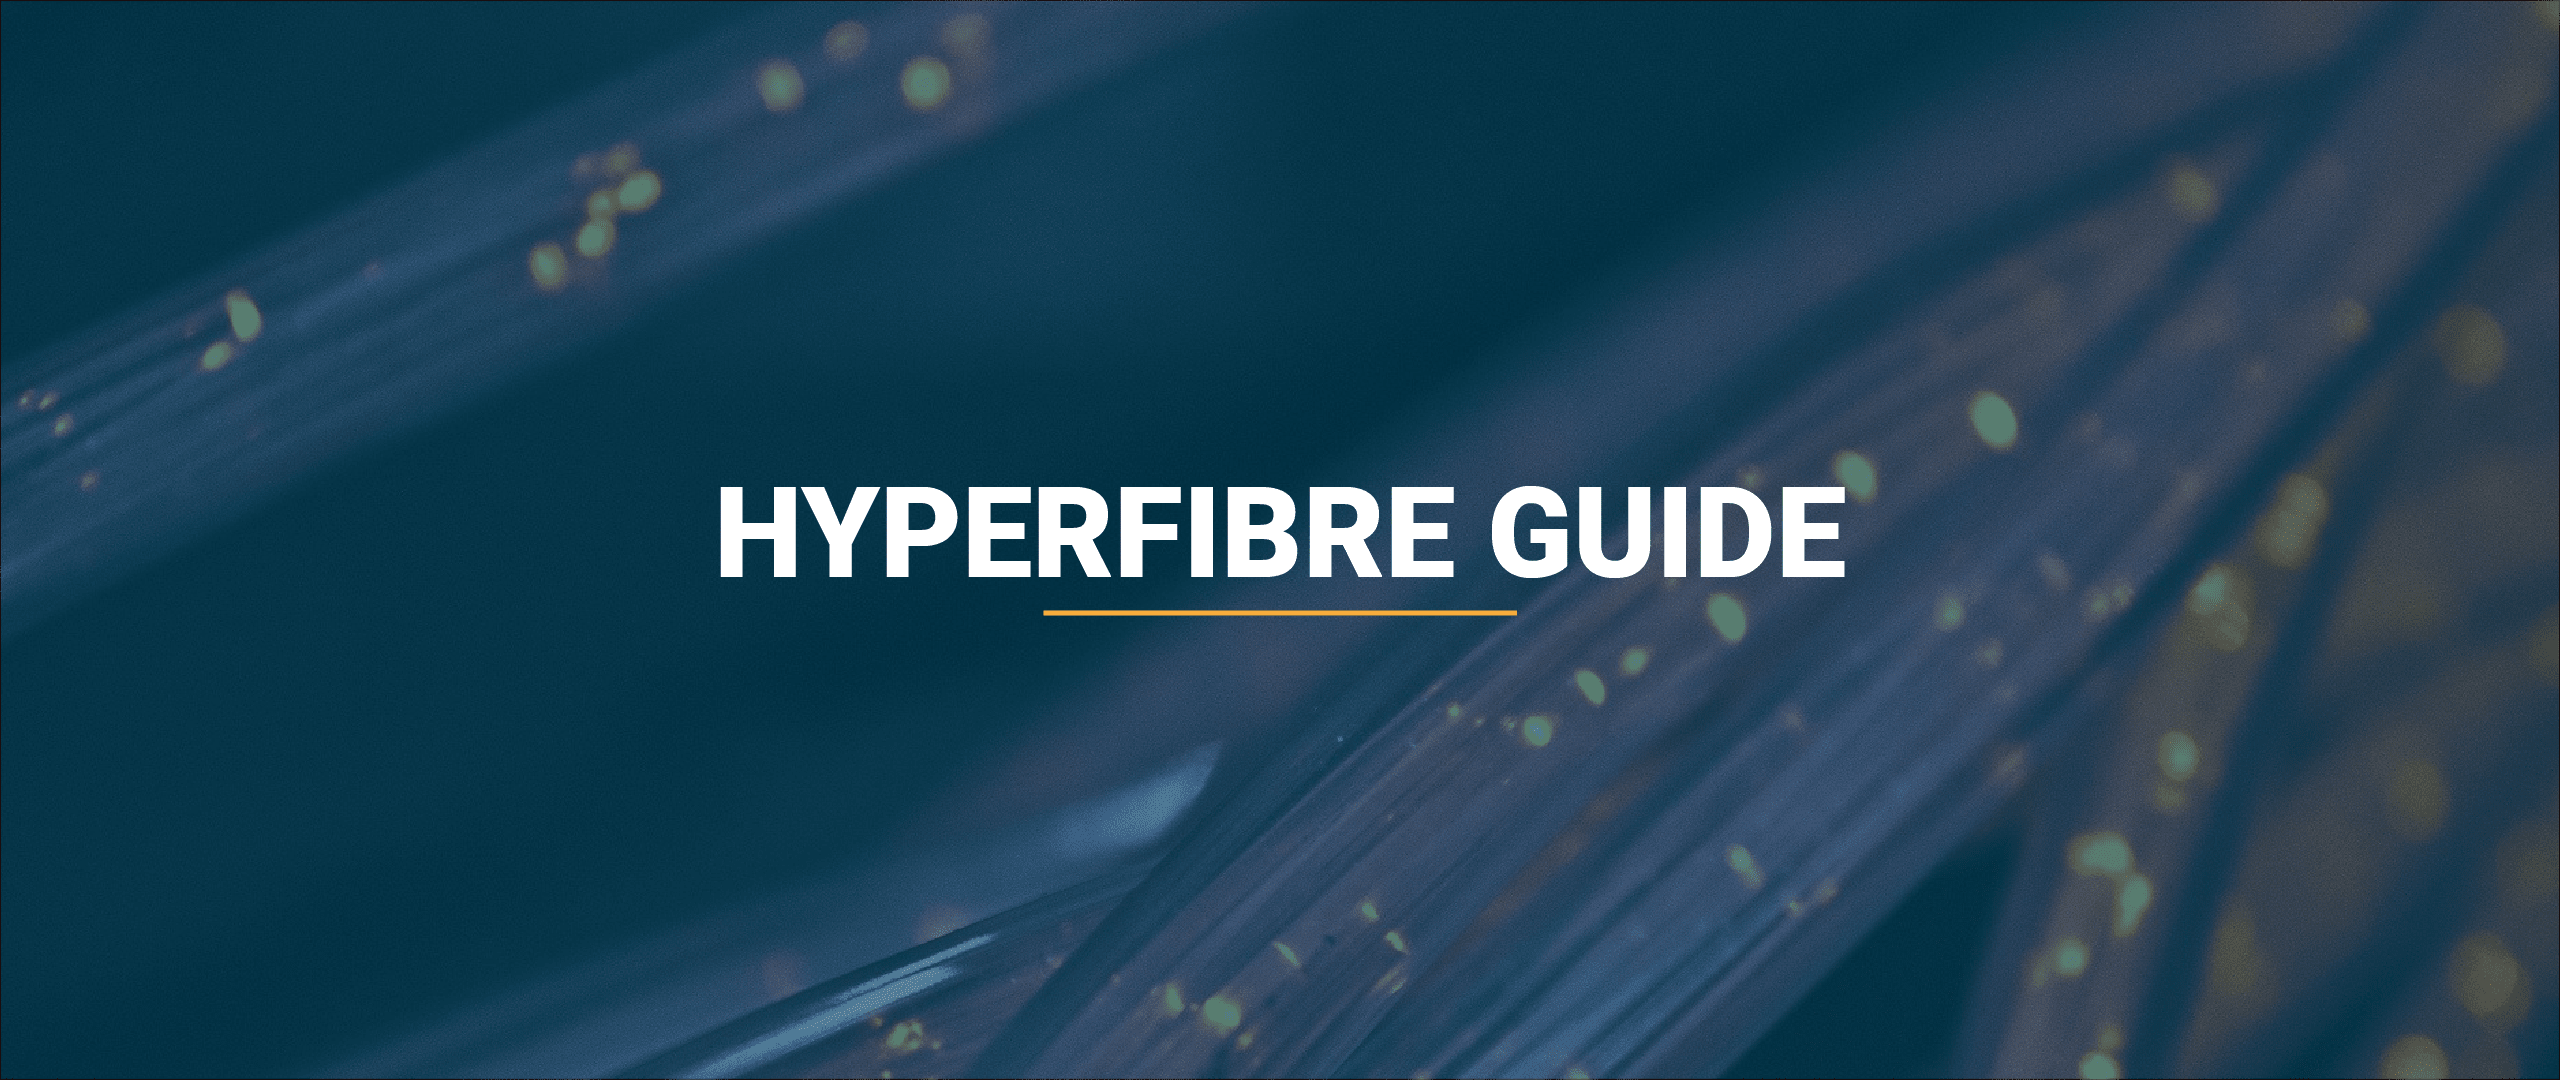 Hyperfibre Guide